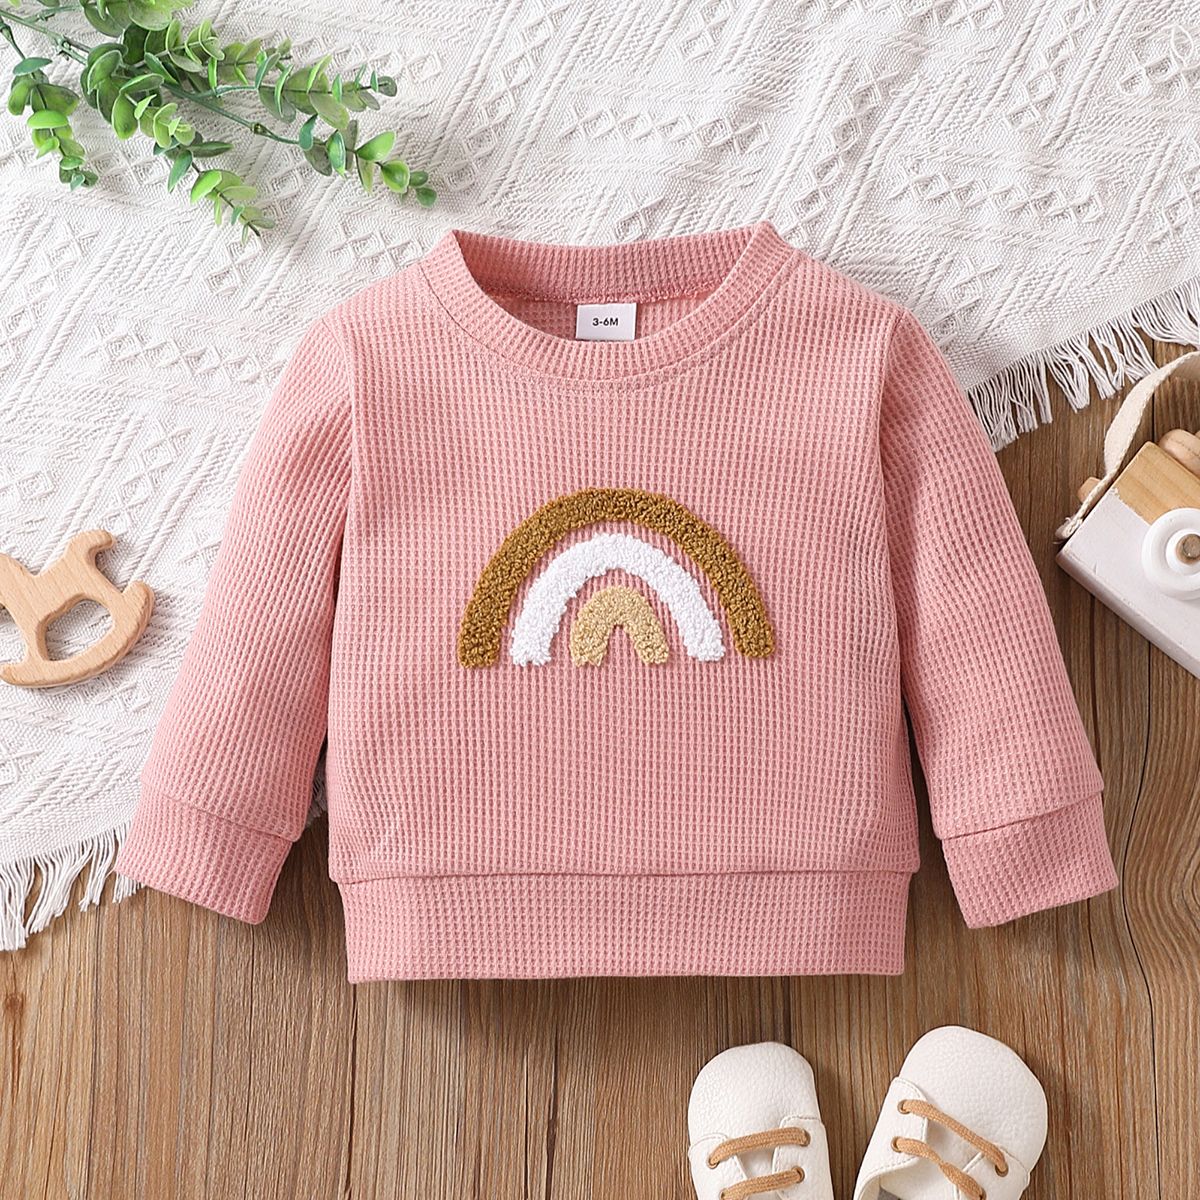 Baby Boy/Girl Letter/Rainbow Design Long-sleeve Sweatshirts